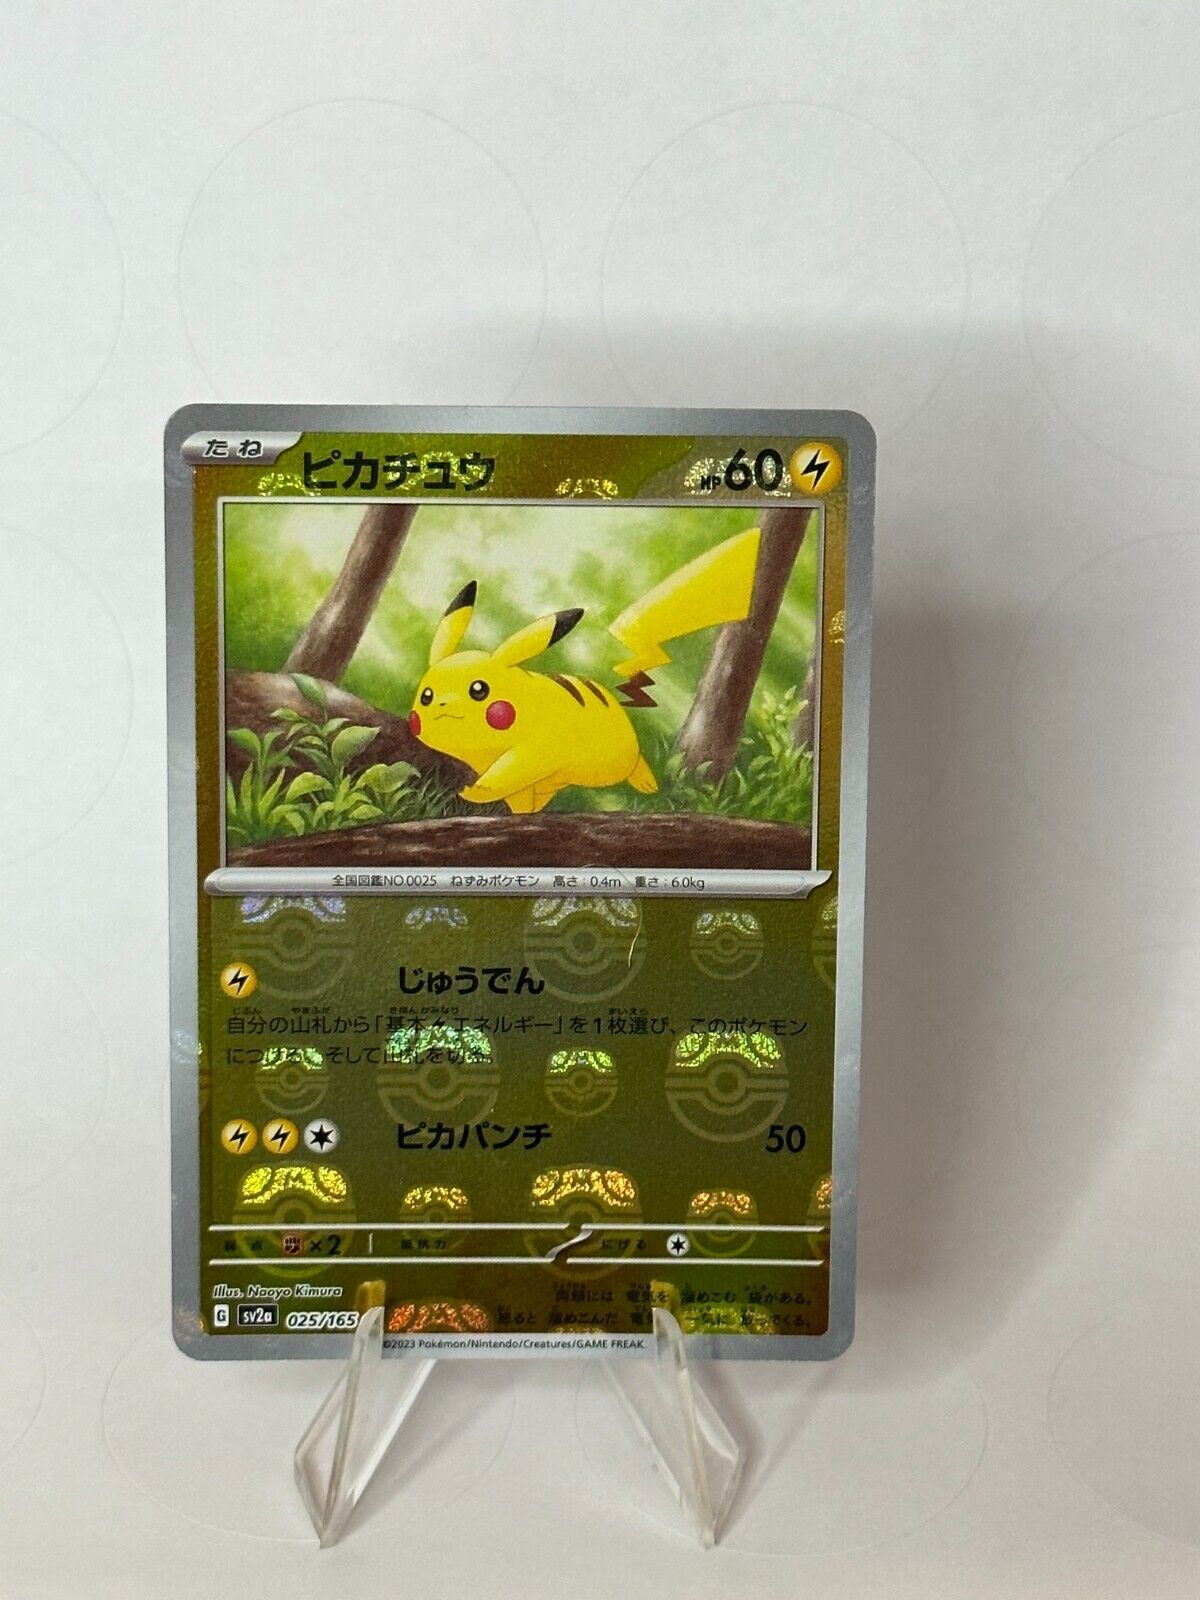 Pokemon Pikachu 025165 Reverse MASTERBALL FOIL SV2a 151 Japanese Ultra Rare